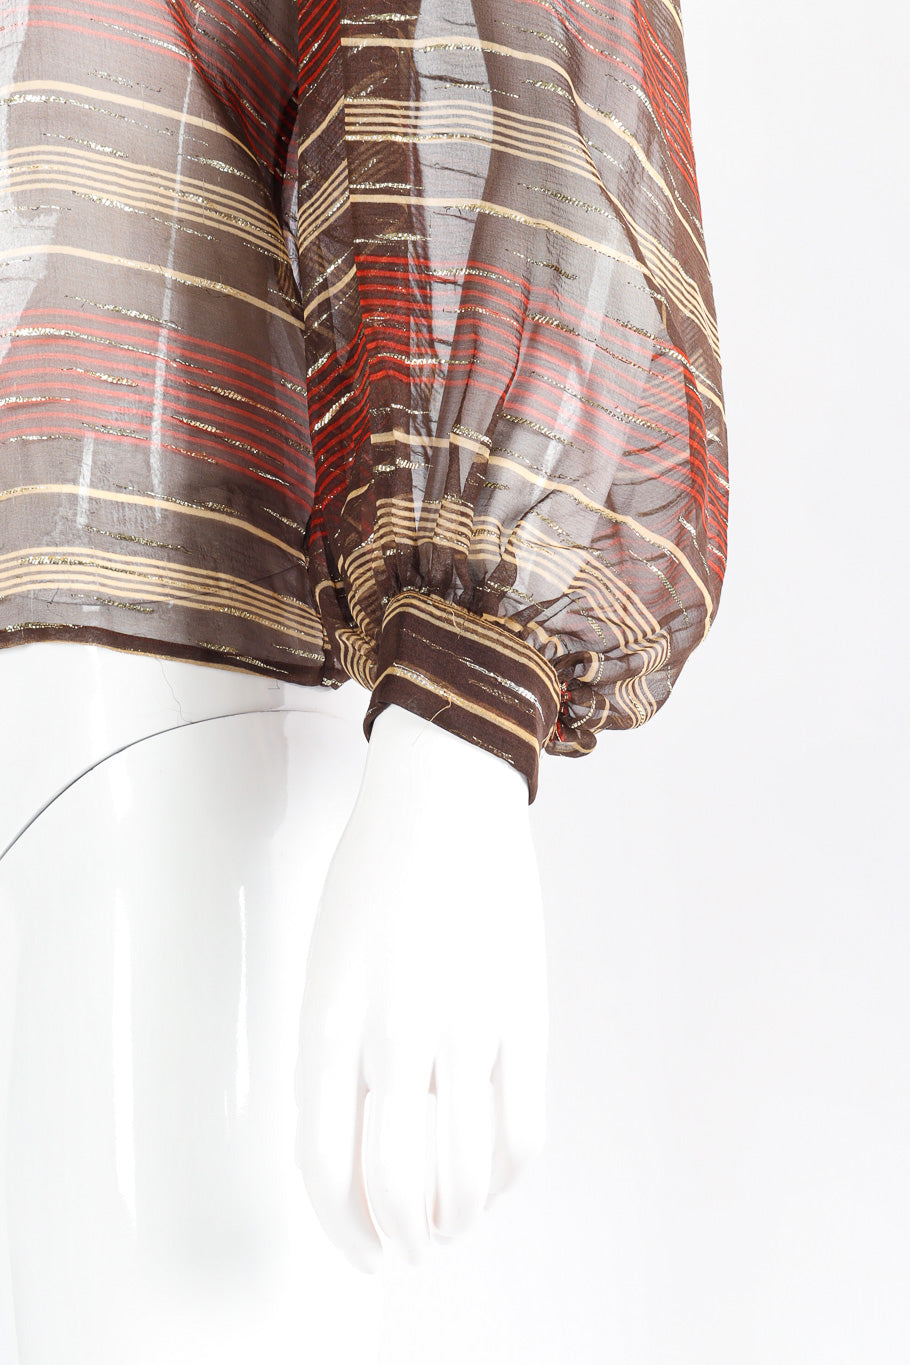 Airy fine lamé striped silk chiffon peasant blouse by Saint Laurent cuff close on mannequin @recessla